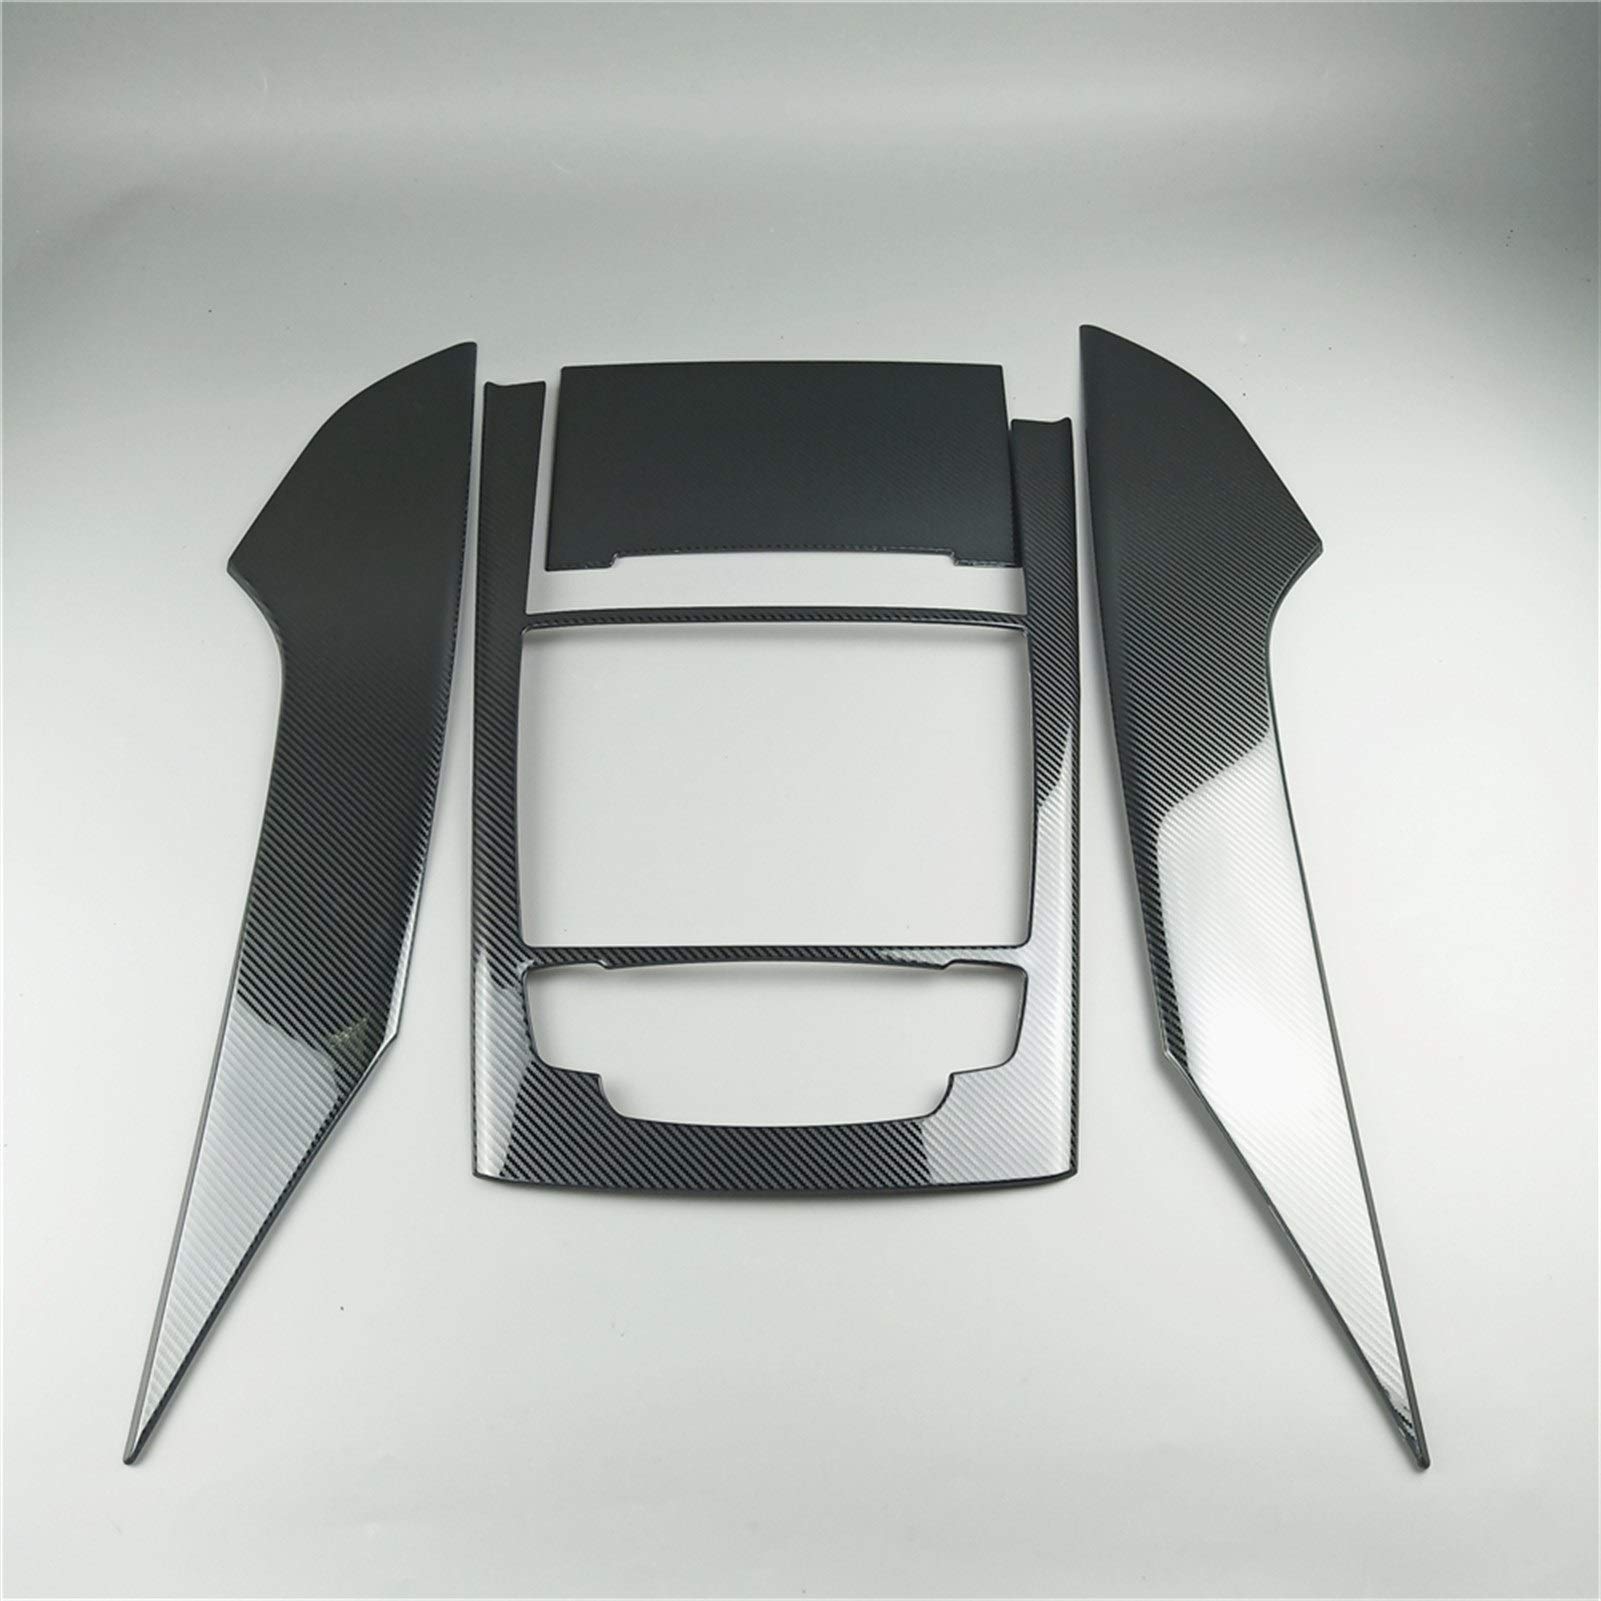 GXDD Konsole Gearshift Rahmen Dekorative Zierleisten Edelstahl Aufkleber gepasst for Audi A6 C7 2012-18 Interieur Zubehör Car Styling Fahrzeuginnenraum (Color Name : Carbon fiber black) von GuOdong